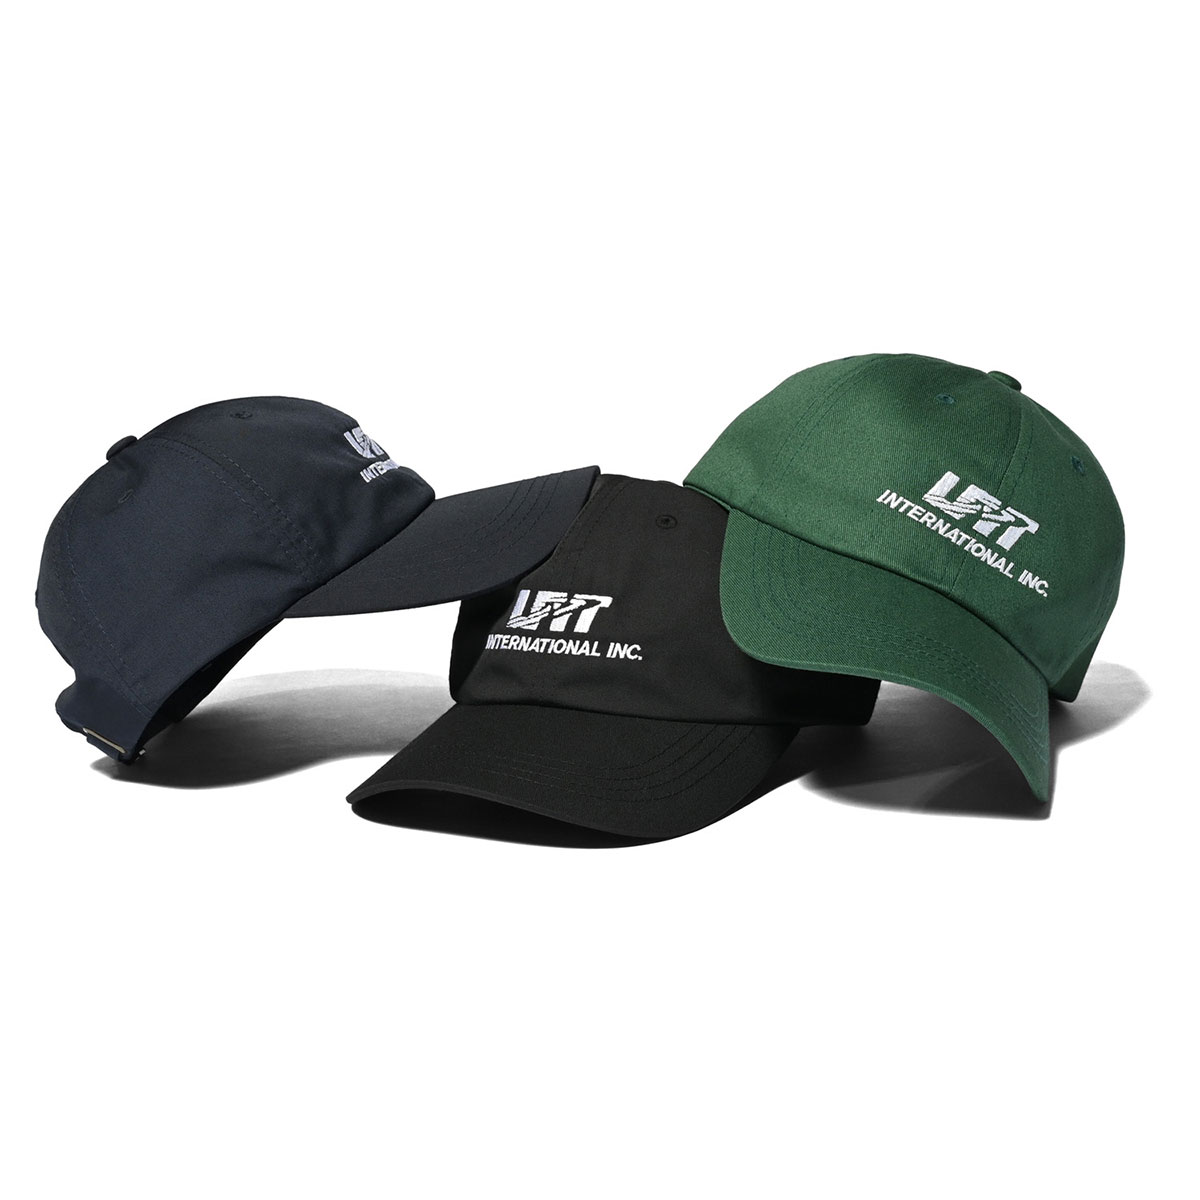 LFYT ラファイエット キャップ Lafayette エルエフワイティー 帽子 企業モノ 企業ロゴ ストリート ヒップホップ ラッパー ダンサー アメカジ カジュアル ブランド LFYT International, Inc. DAD HAT LA231406